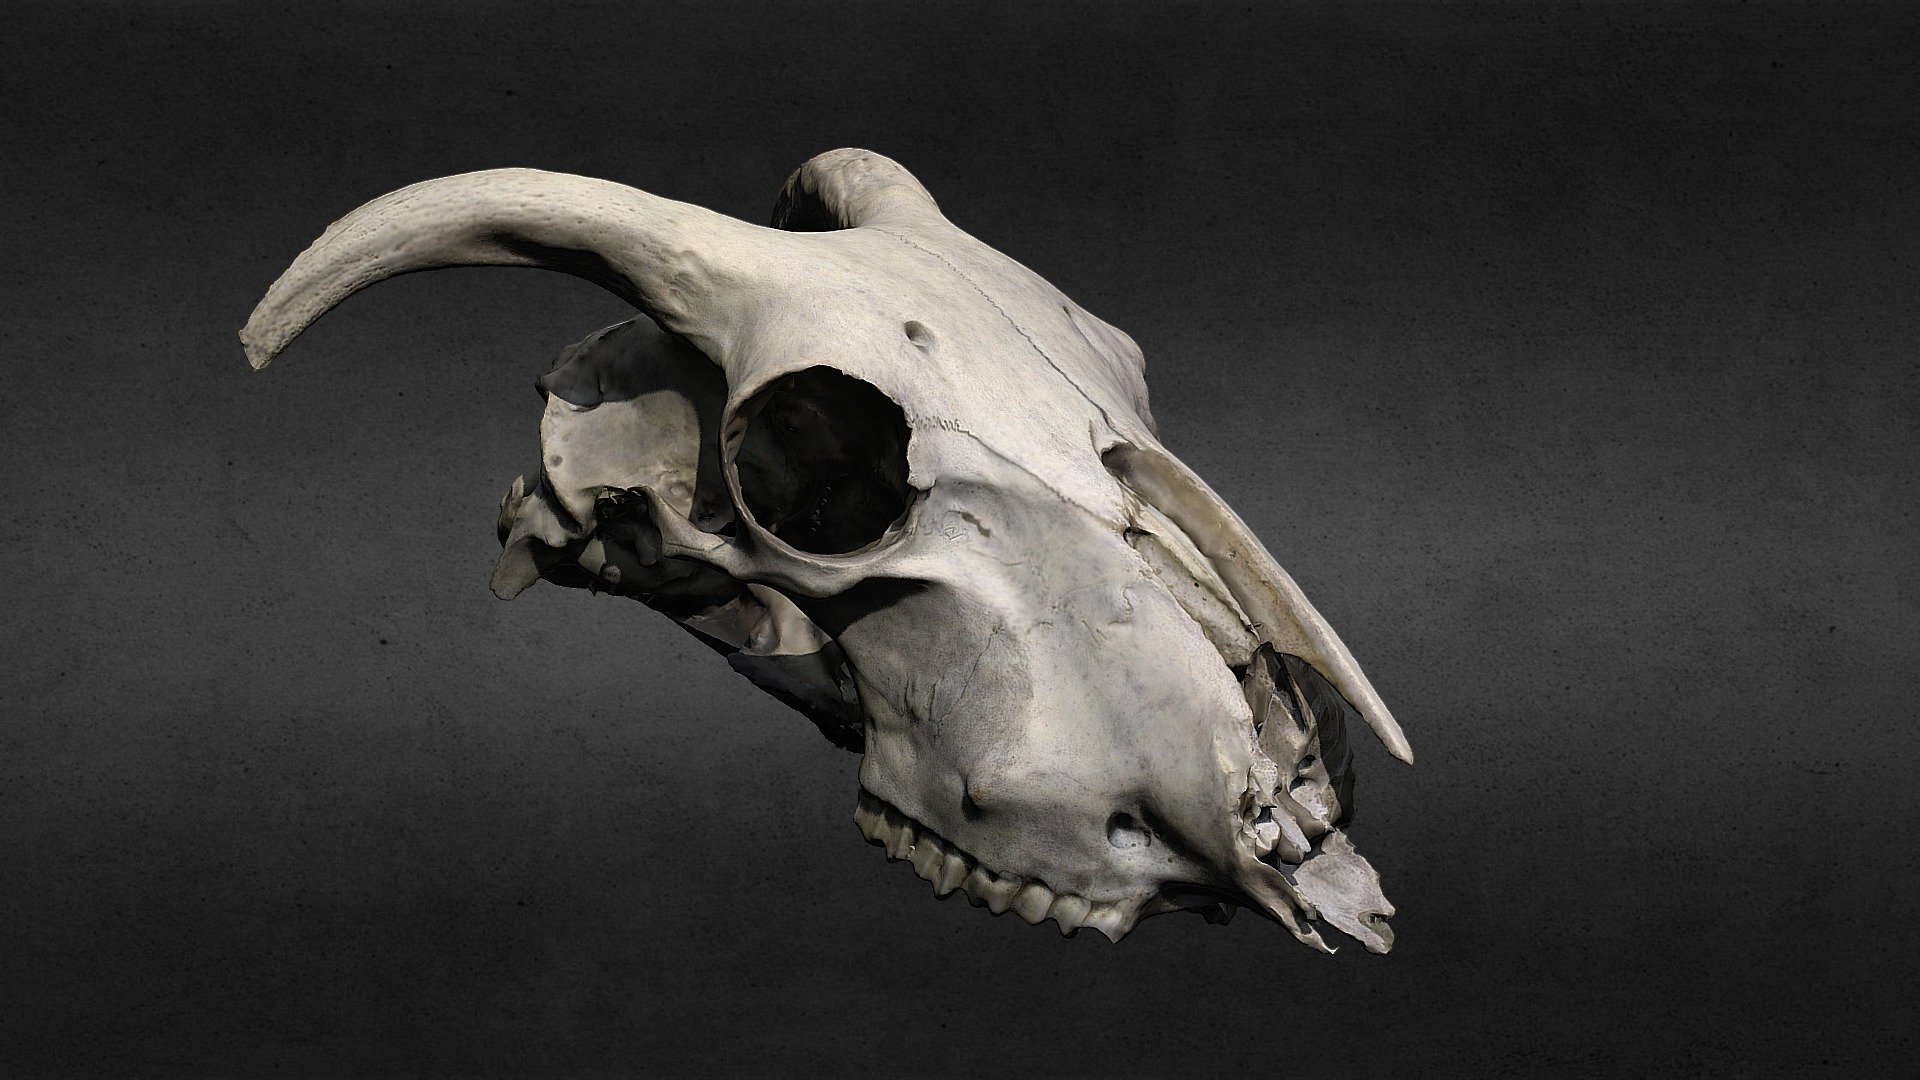 Sheep Skull - Buy Royalty Free 3D model by 3dcapture.co.uk.